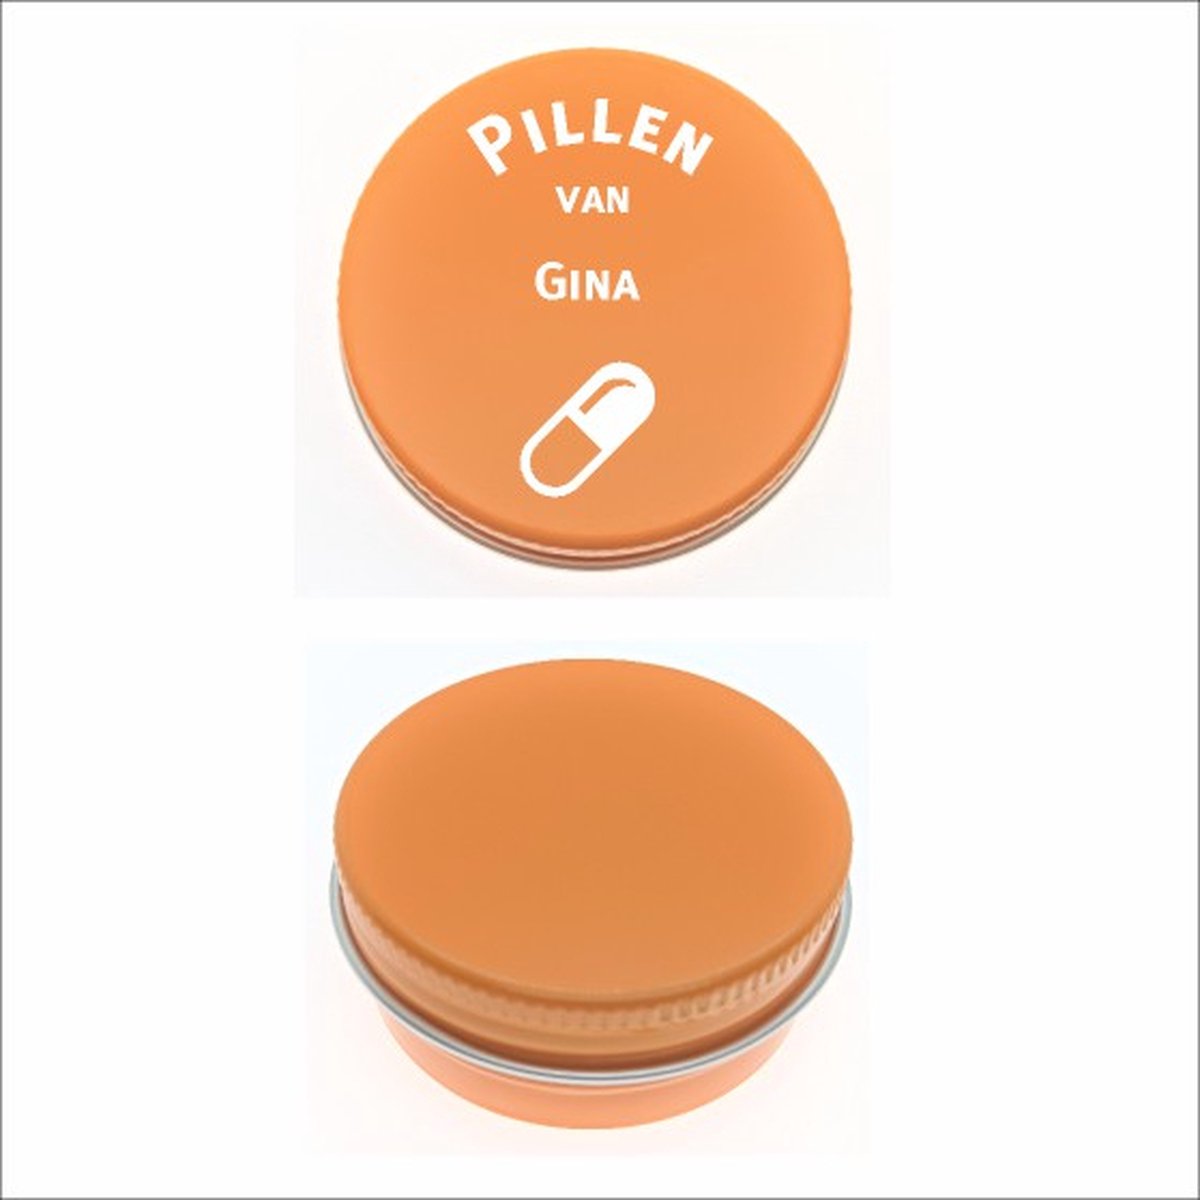 Pillen Blikje Met Naam Gravering - Gina